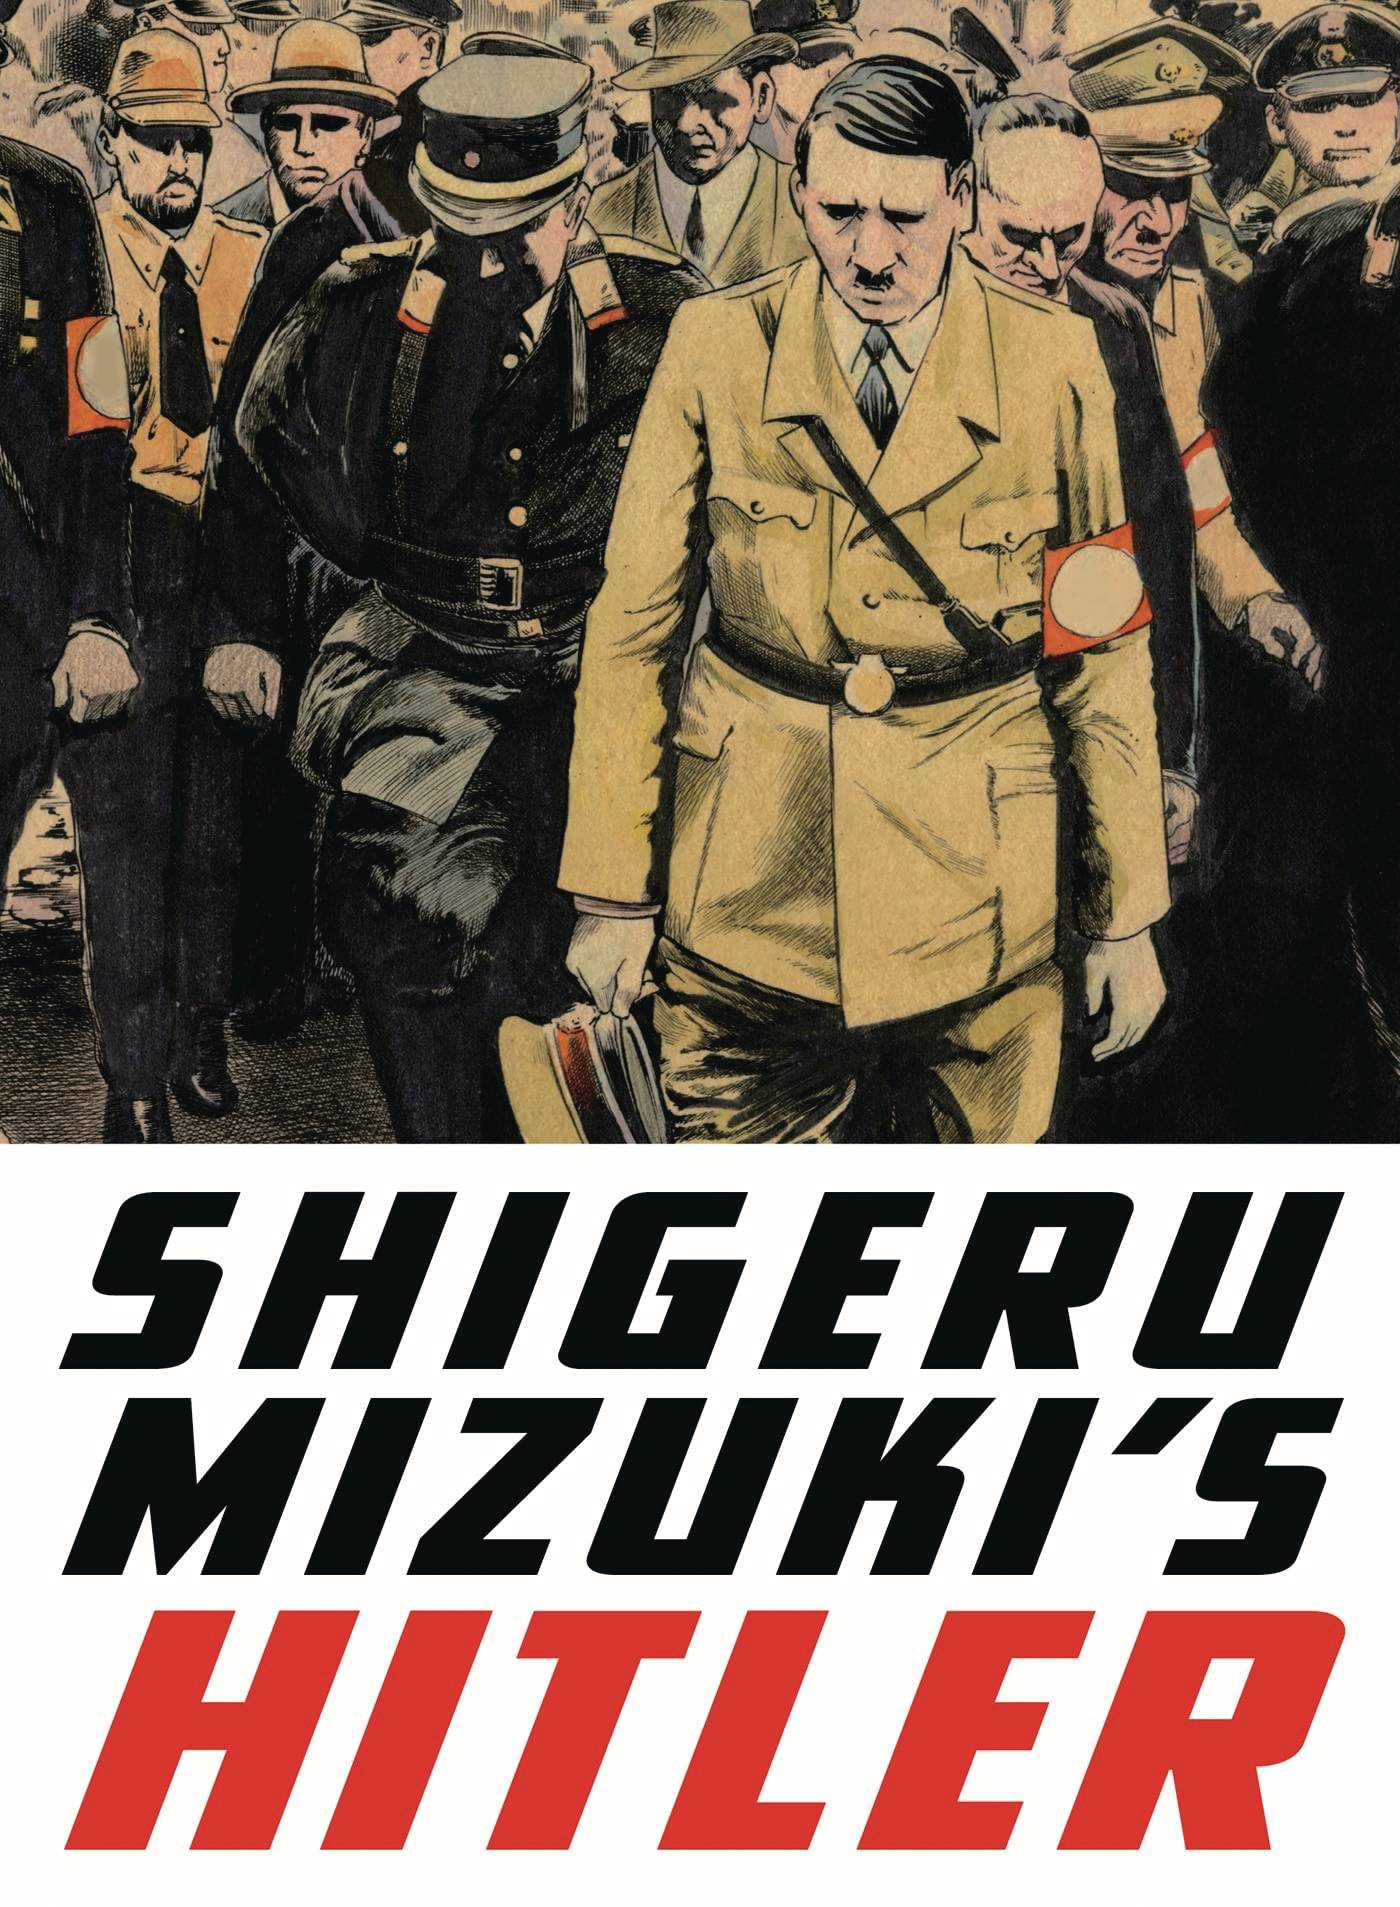 HITLER GN SHIGERU MIZUKI (NEW PTG) (MR)